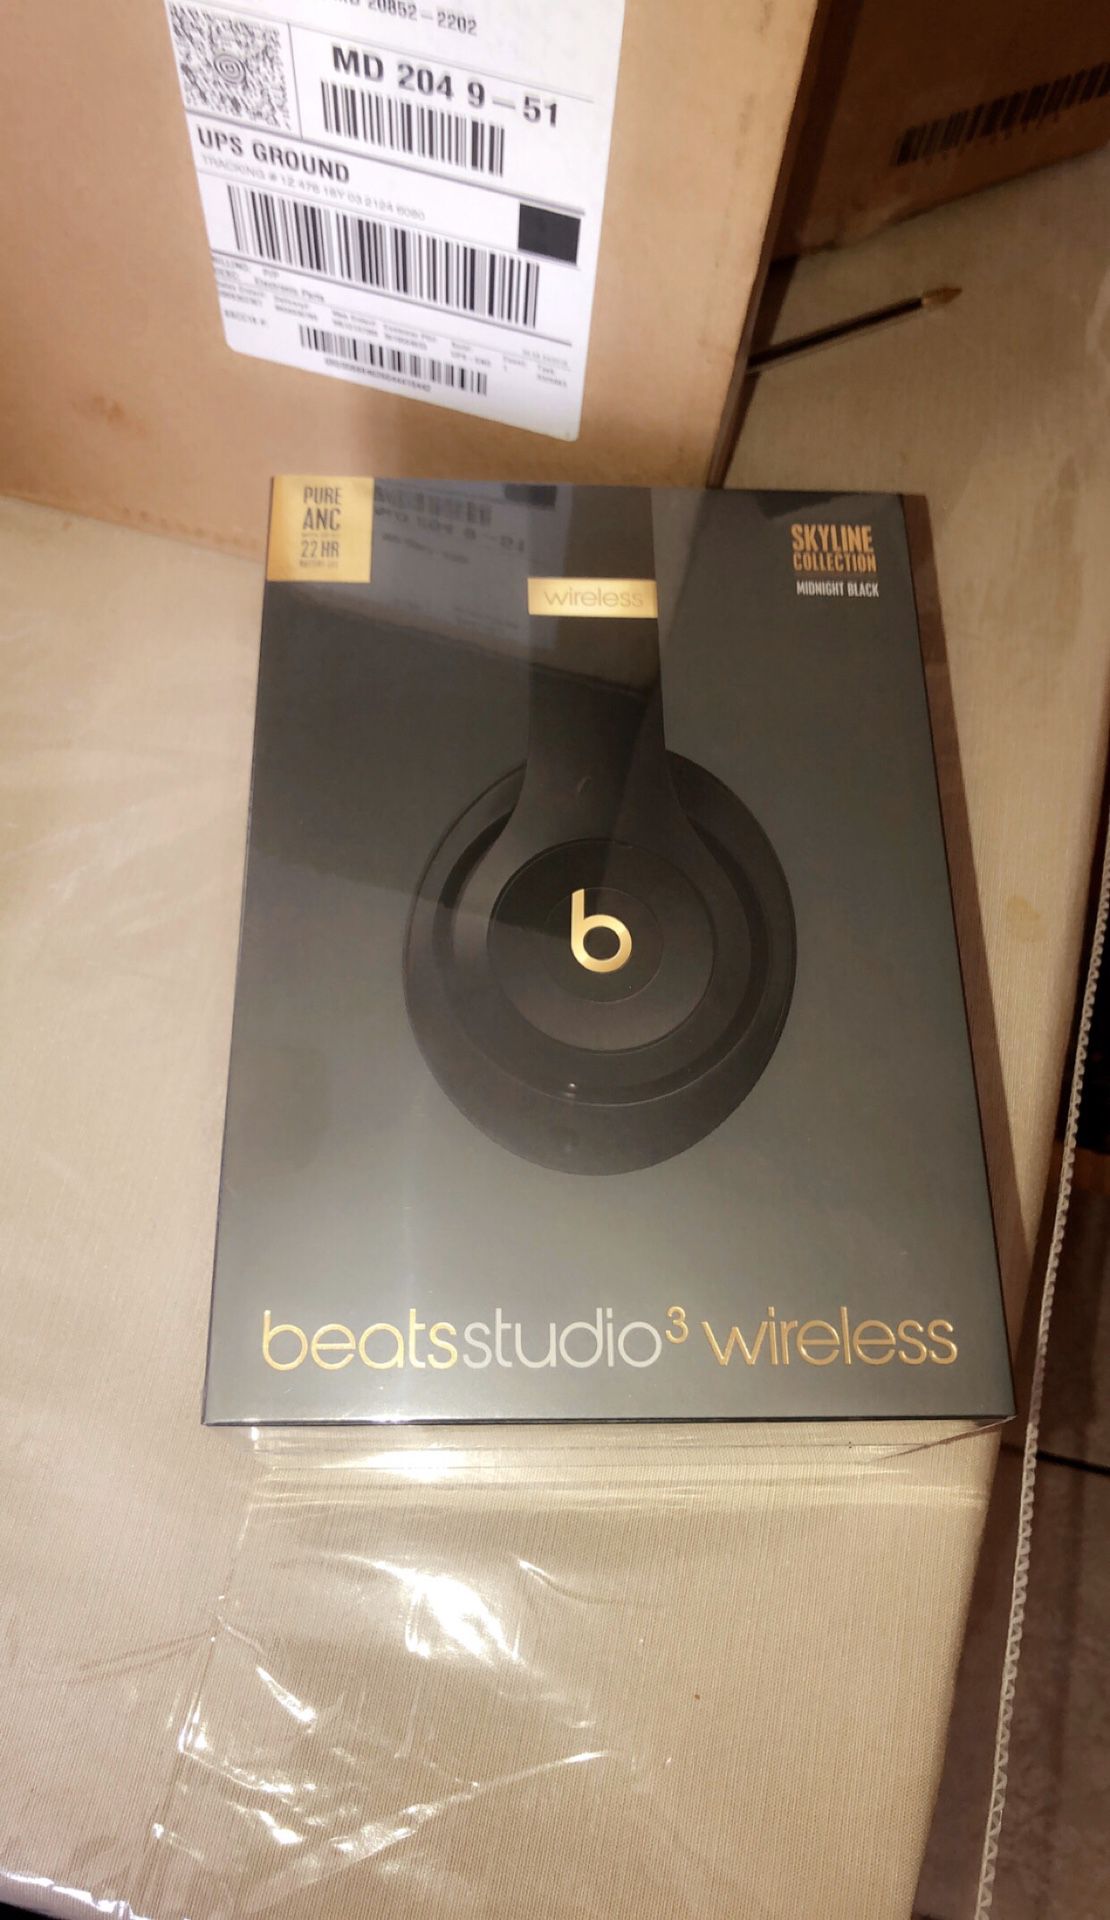 Beat studio3 Wireless